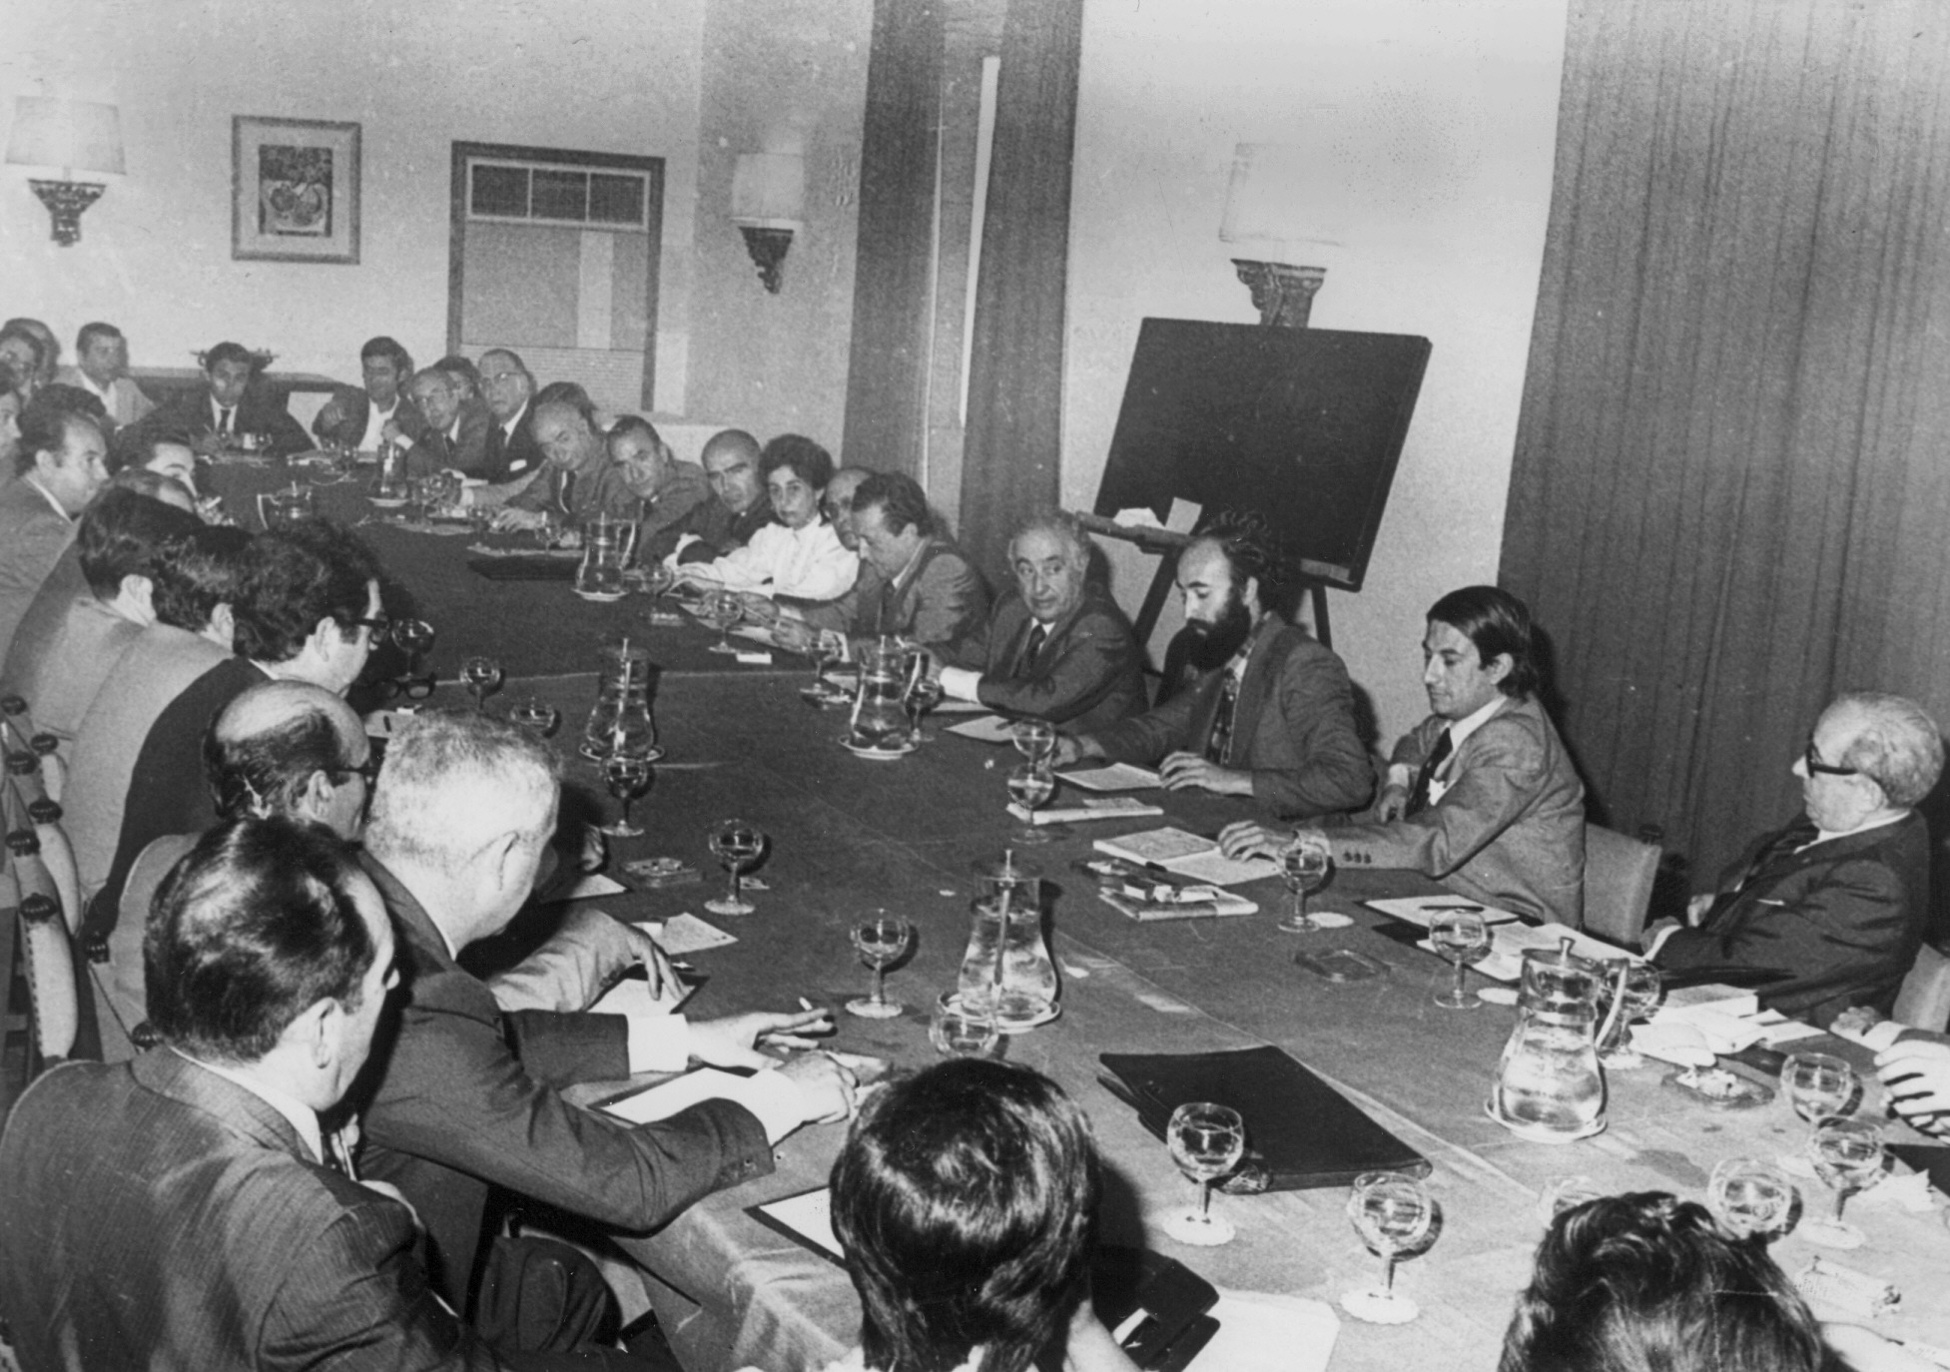 1977 - Reunión de parlamentarios gallegos para tratar sobre la problemática preautonómica gallega.